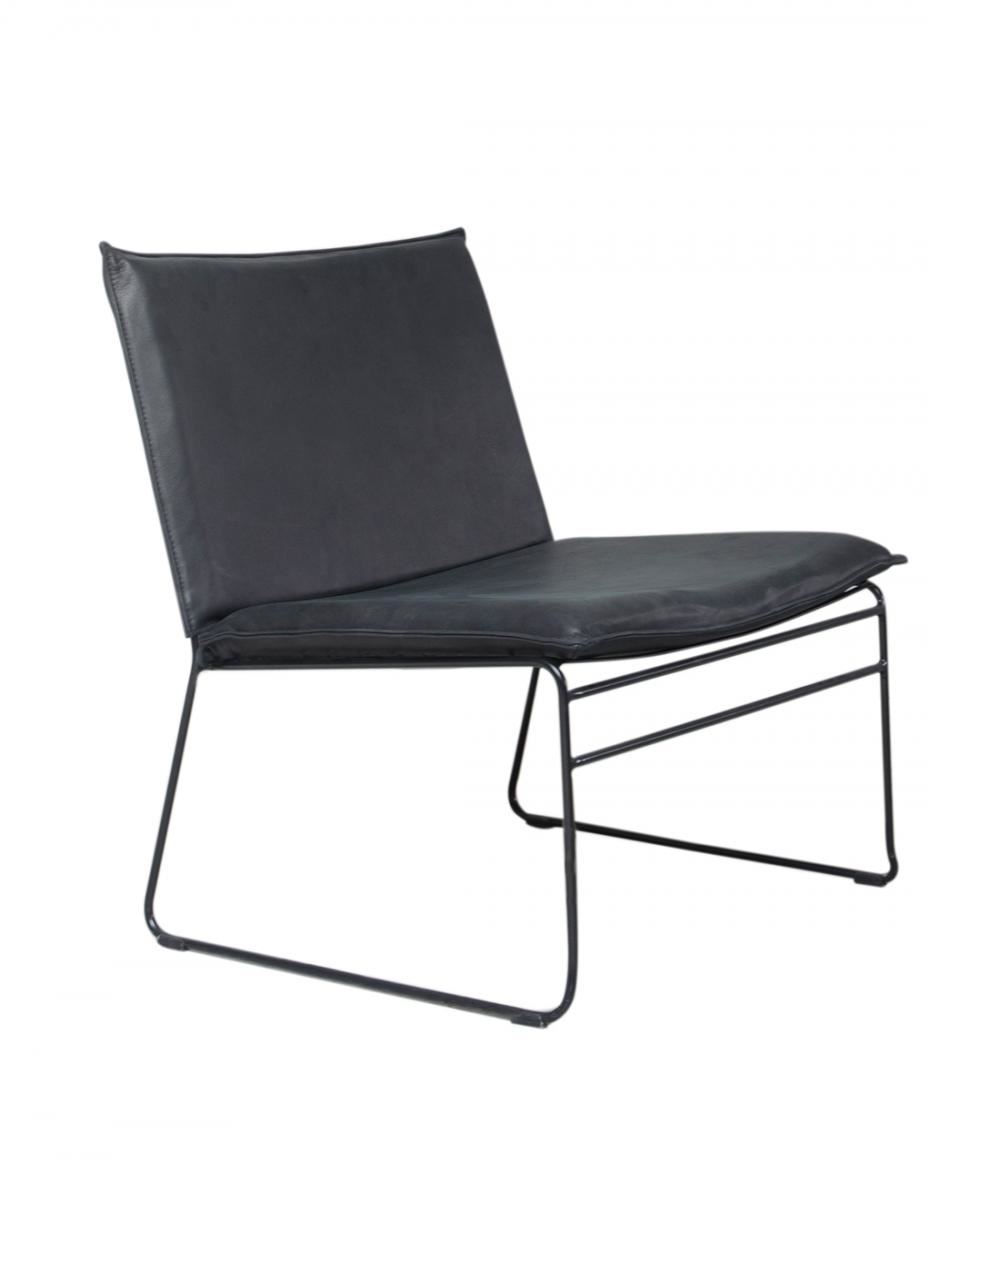 Kyst Lounge Chair Outdoor Lounge Chair With Light Grey Cushion Ottoman Light Grey Cushion